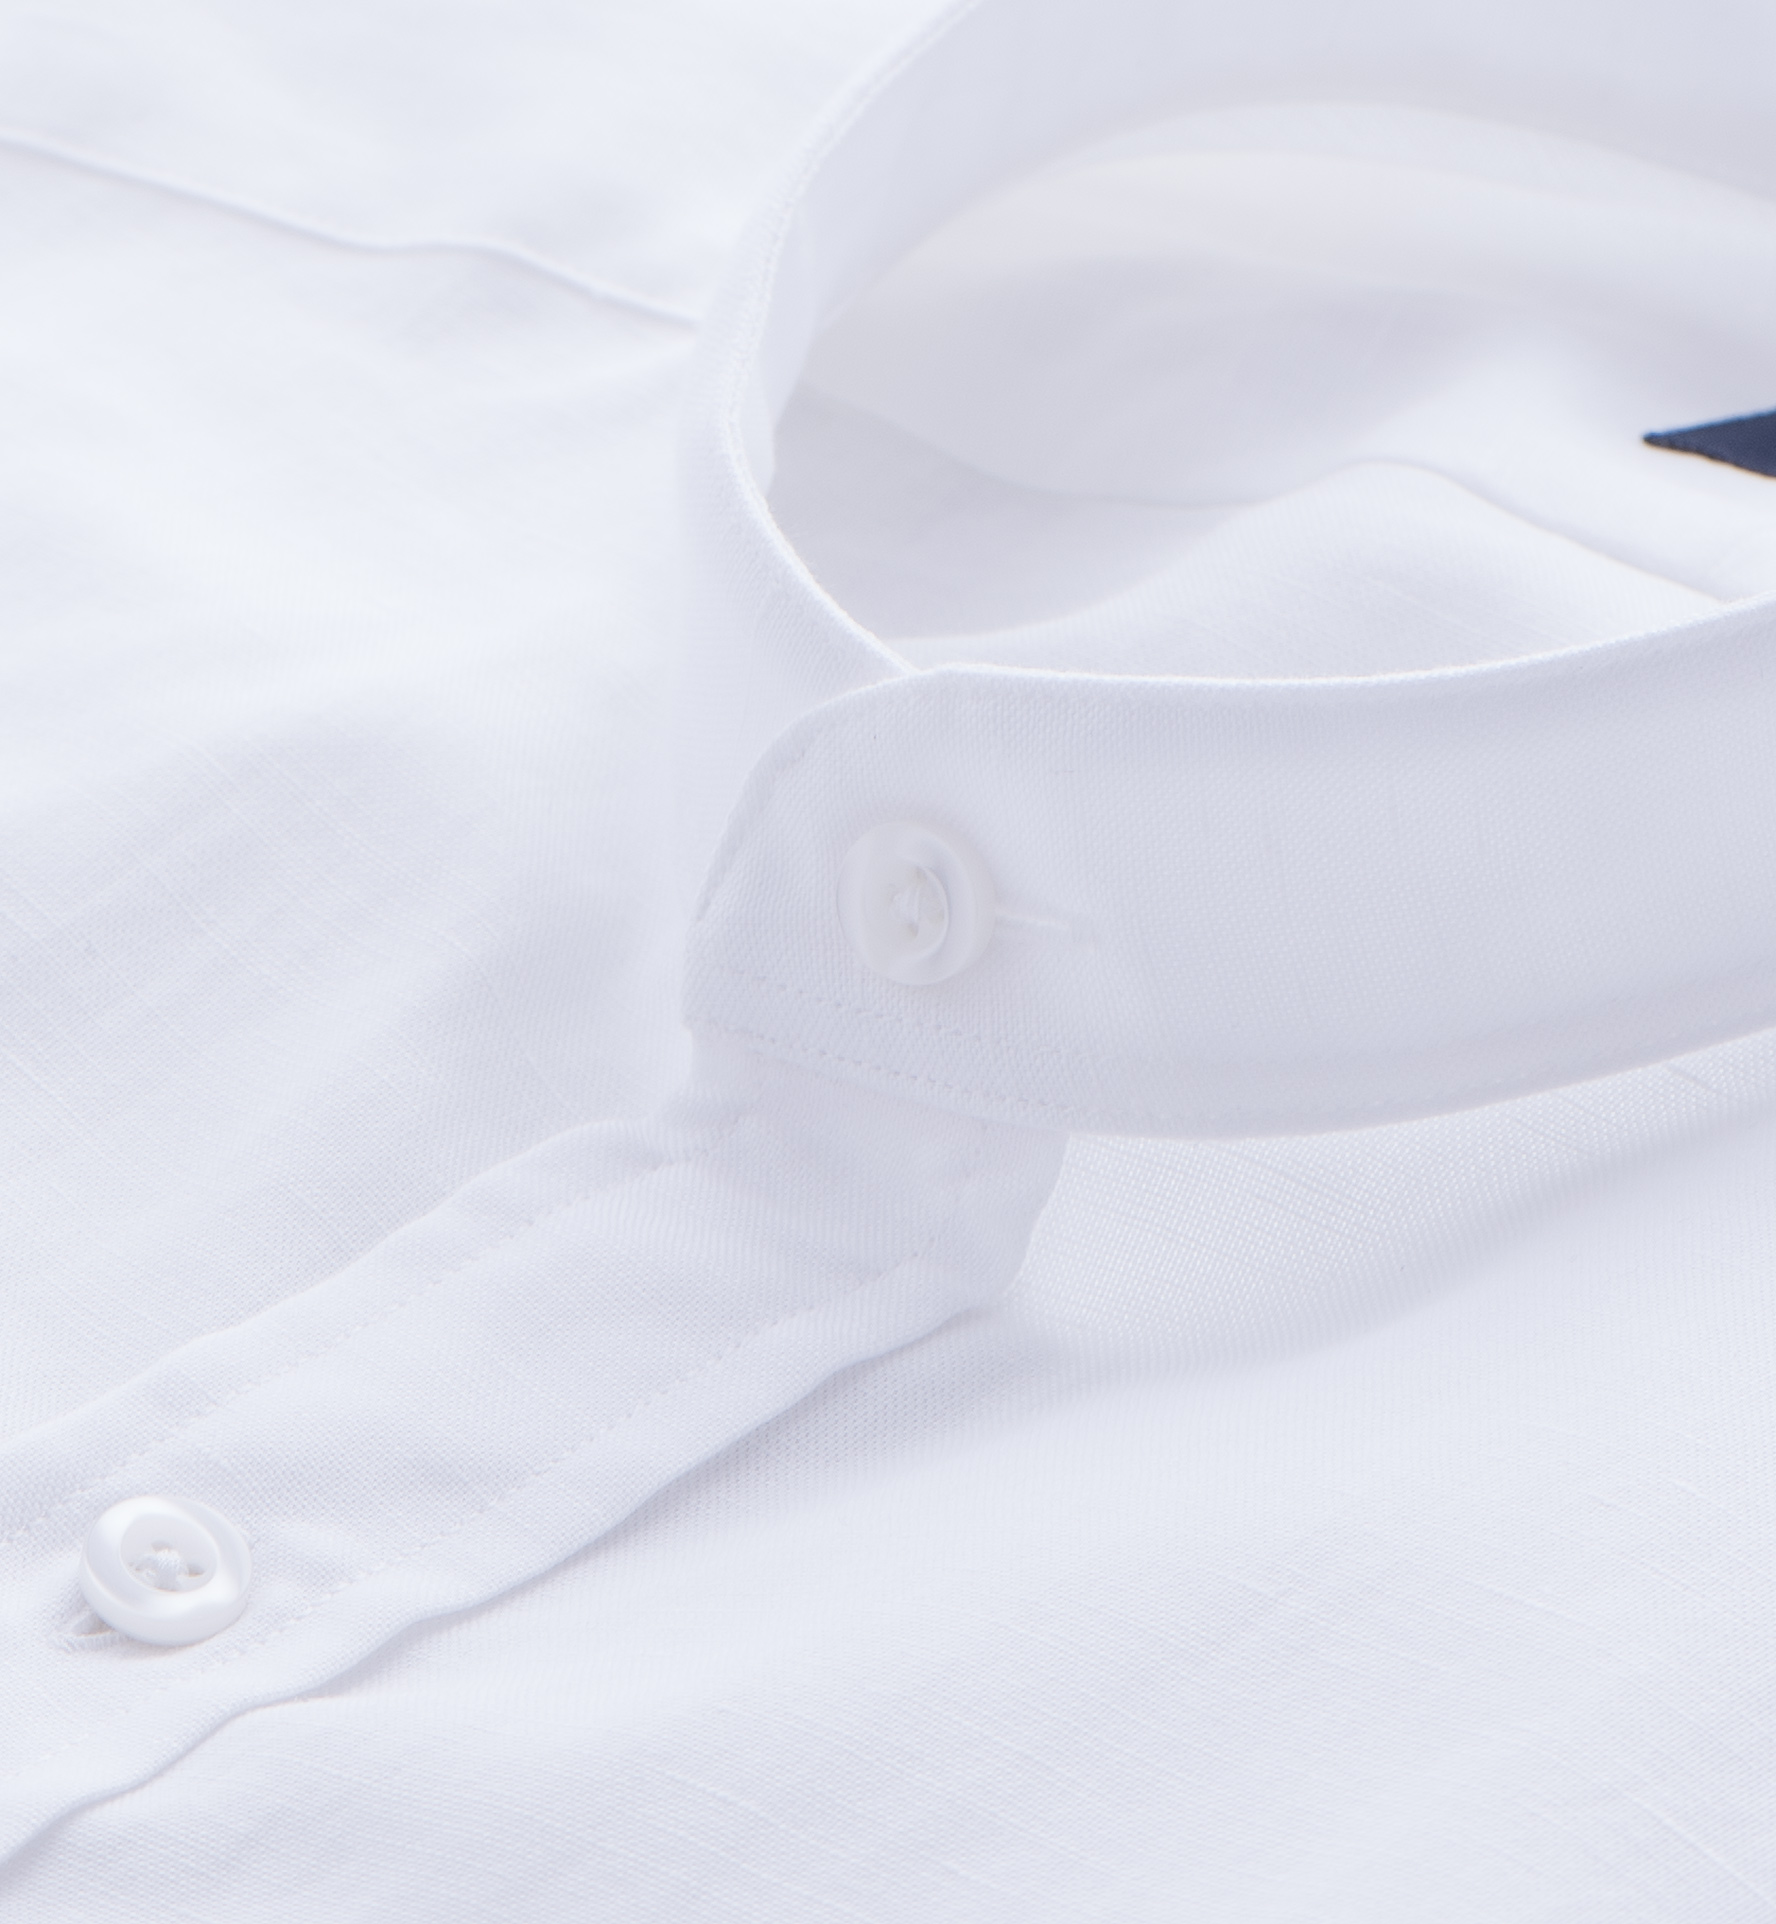 Portuguese White Cotton Linen Oxford Short Sleeve Shirtby Proper Cloth